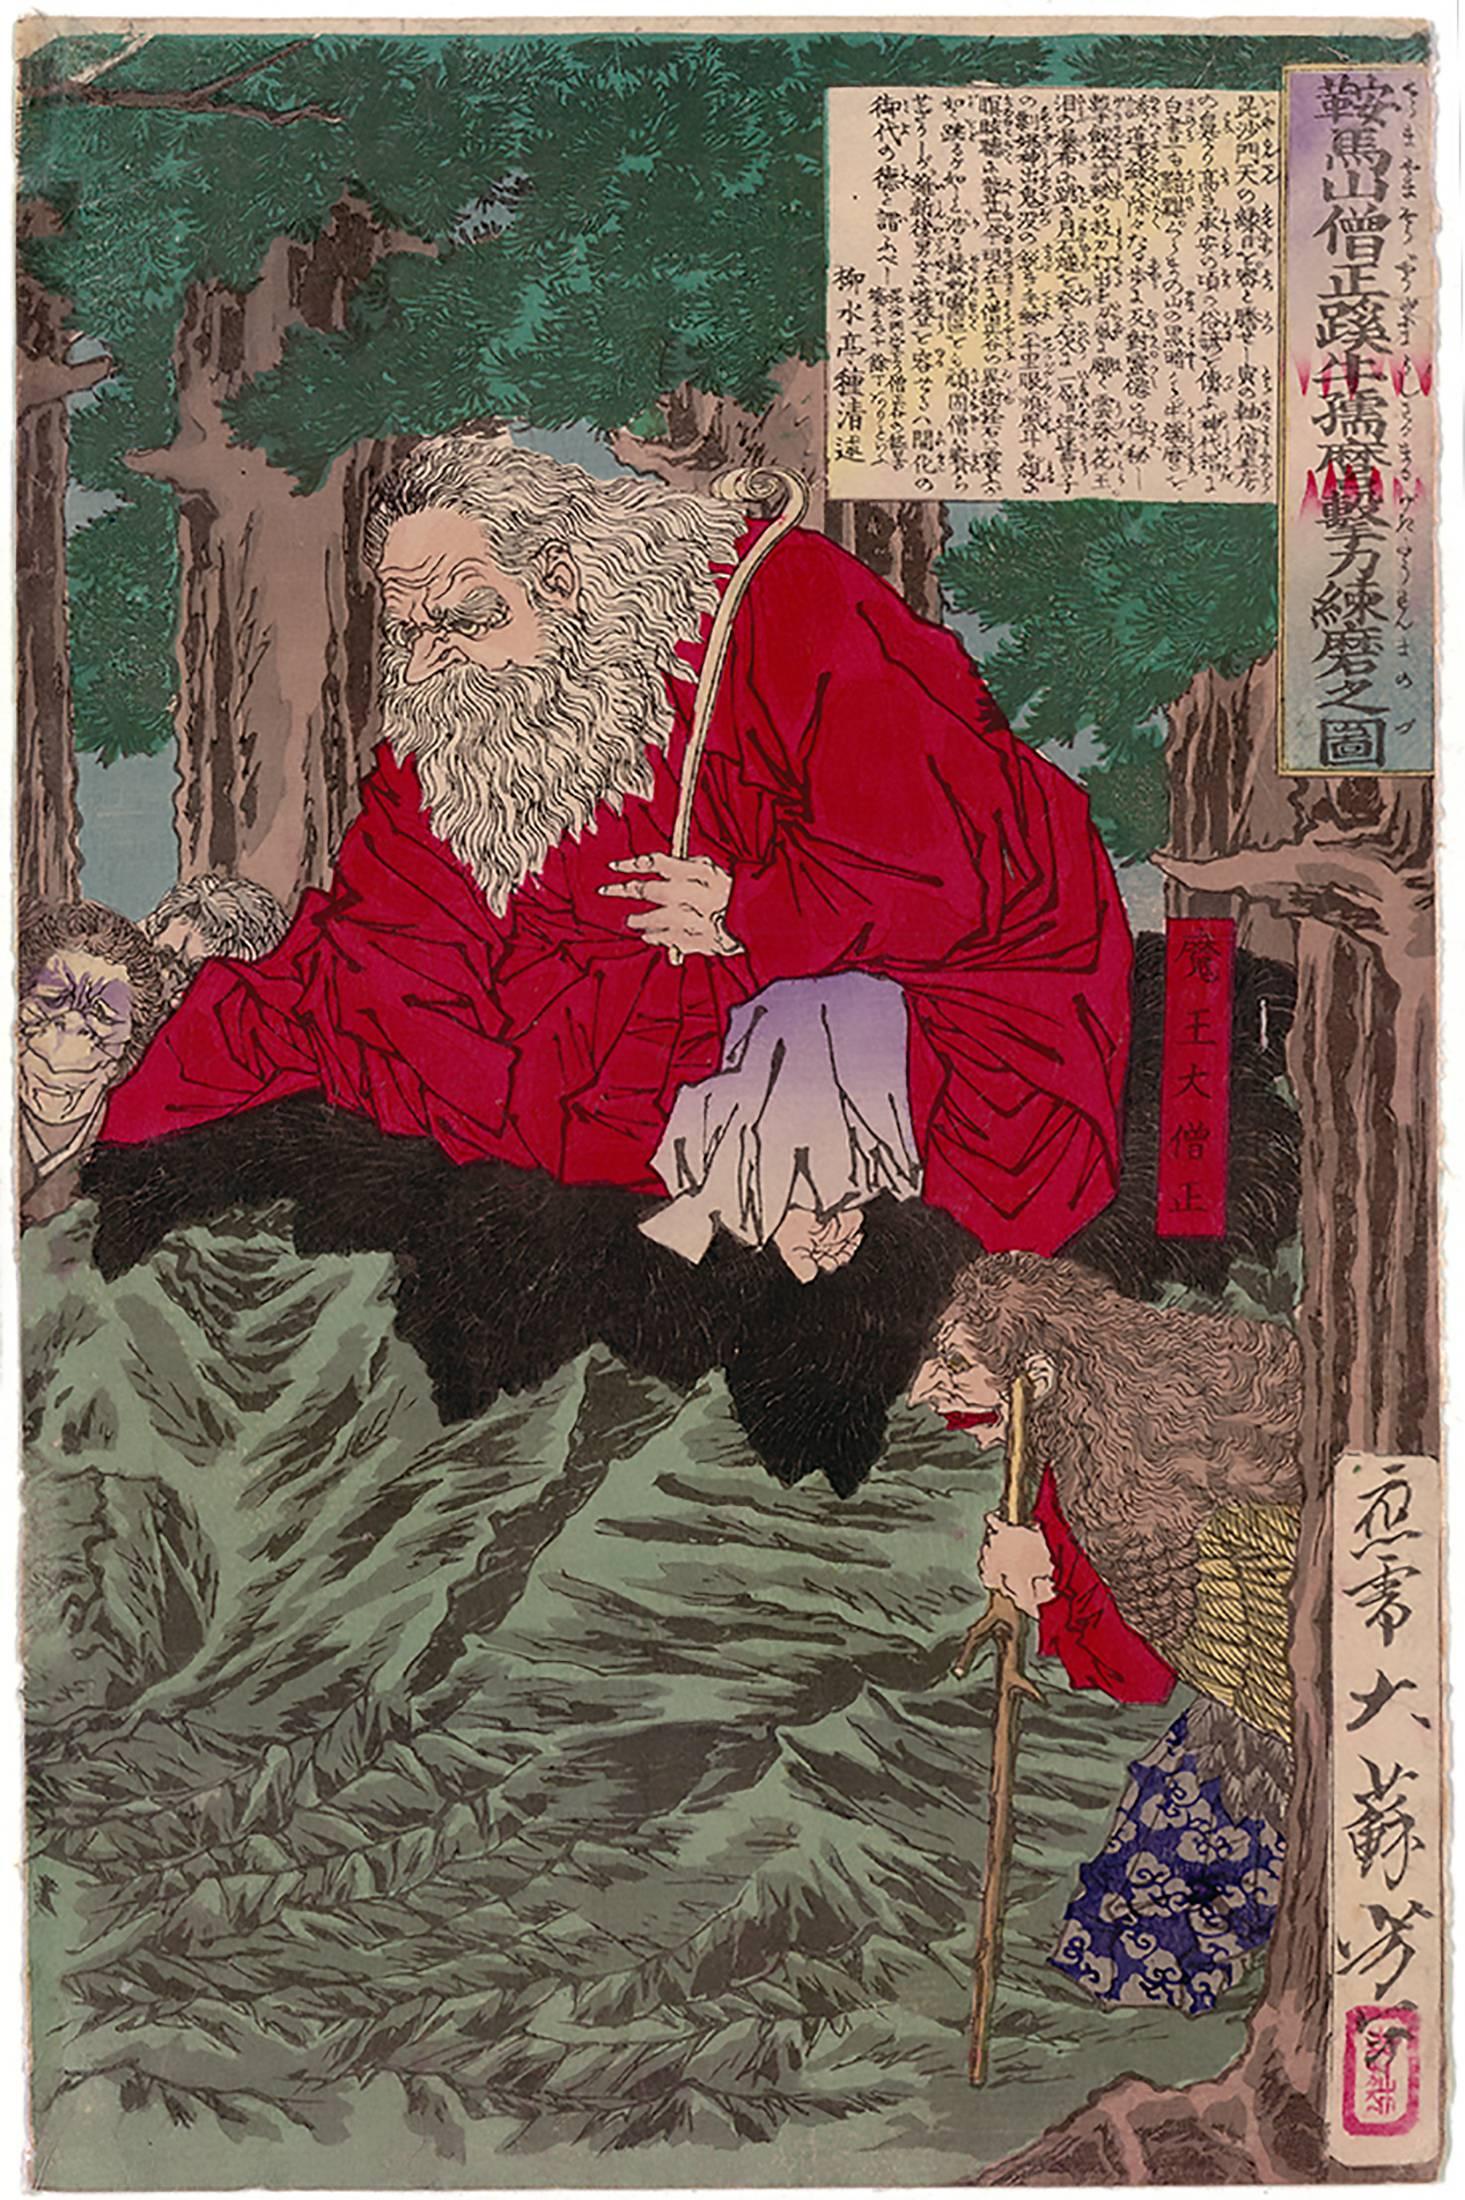 Artist: Yoshitoshi Tsukioka (1839-1892)
Title: The Picture of Ushiwakamaru and the Great Monk in Mt. Kurama
Publisher: Kobayashi Tetsujiro
Date: 1880
Dimensions: (L) 23.7 x 36 (C) 23.6 x 36 (R) 23.6 x 36 cm
Condition: Backing along edge of print.